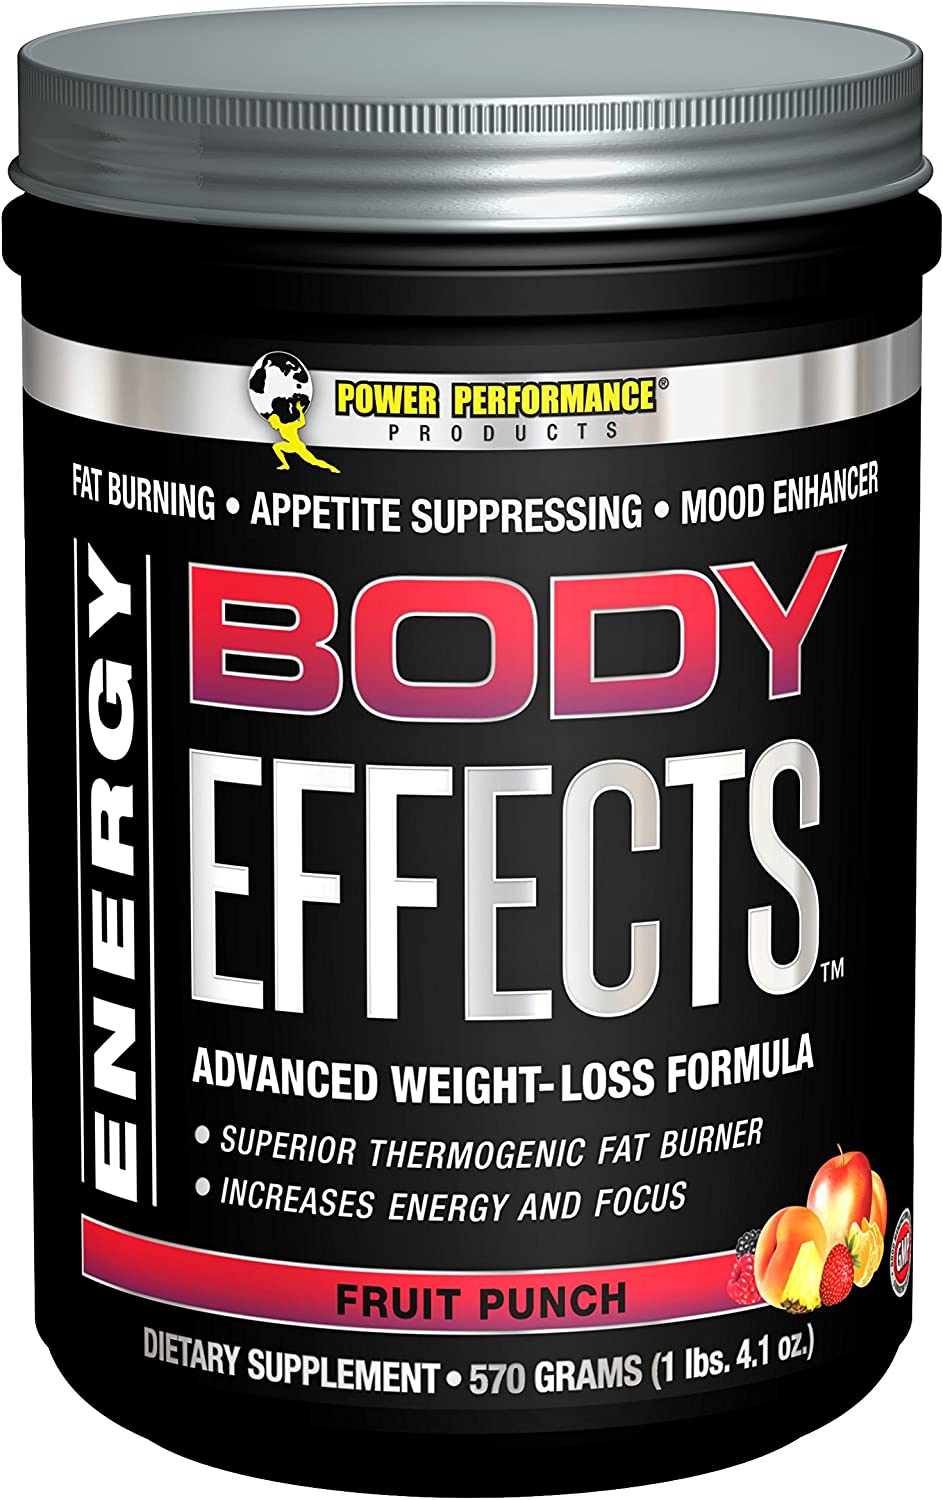 Body Effects Pre Workout Fat Burner